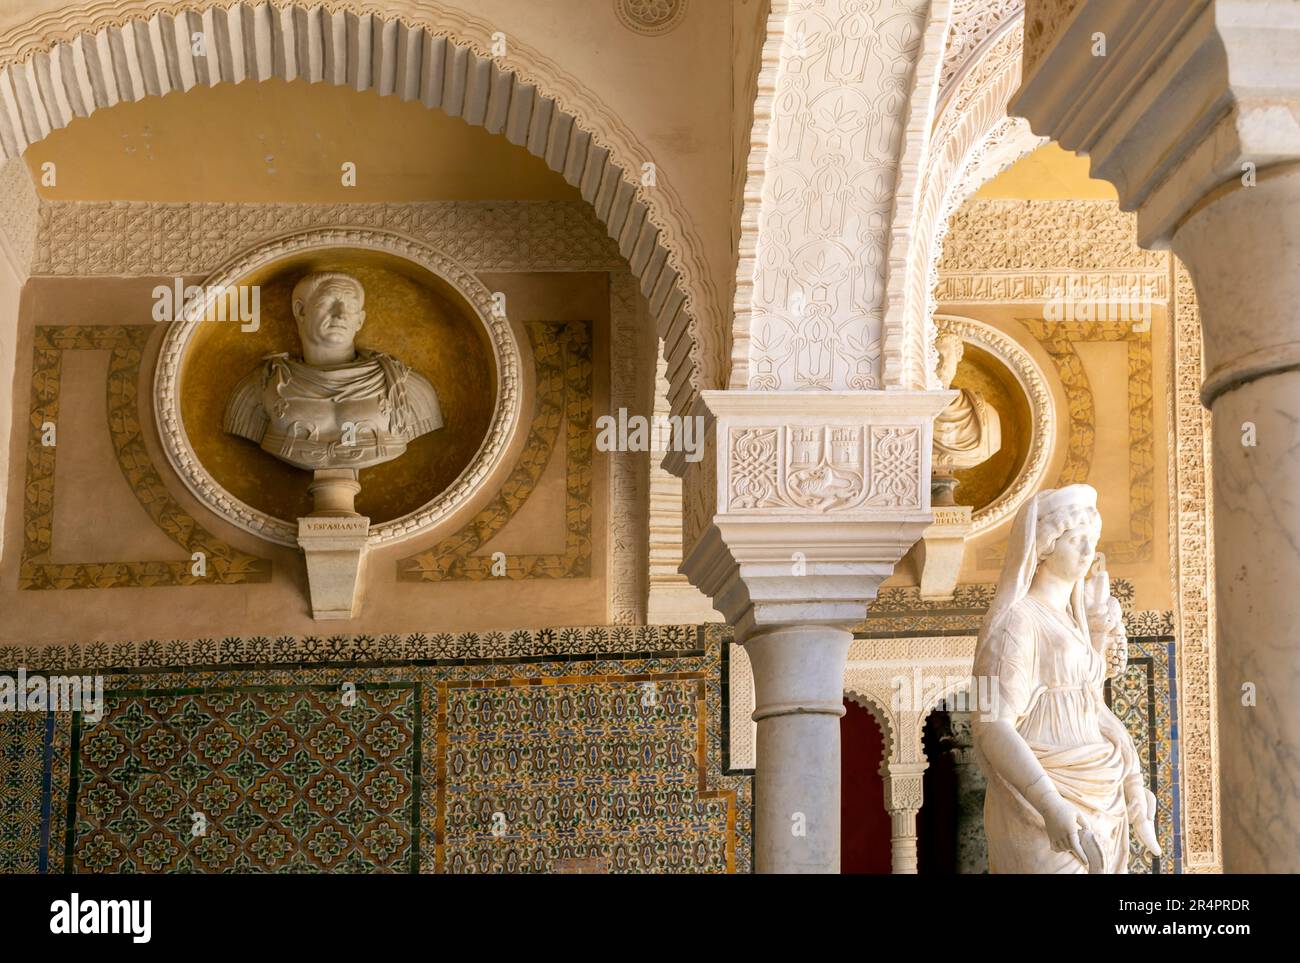 Spain, Seville, Andalusia, Casa de Pilatos (Pilate's House), Courtyard, an example of Italian Renaissance building with Mudejar elements and decoratio Stock Photo